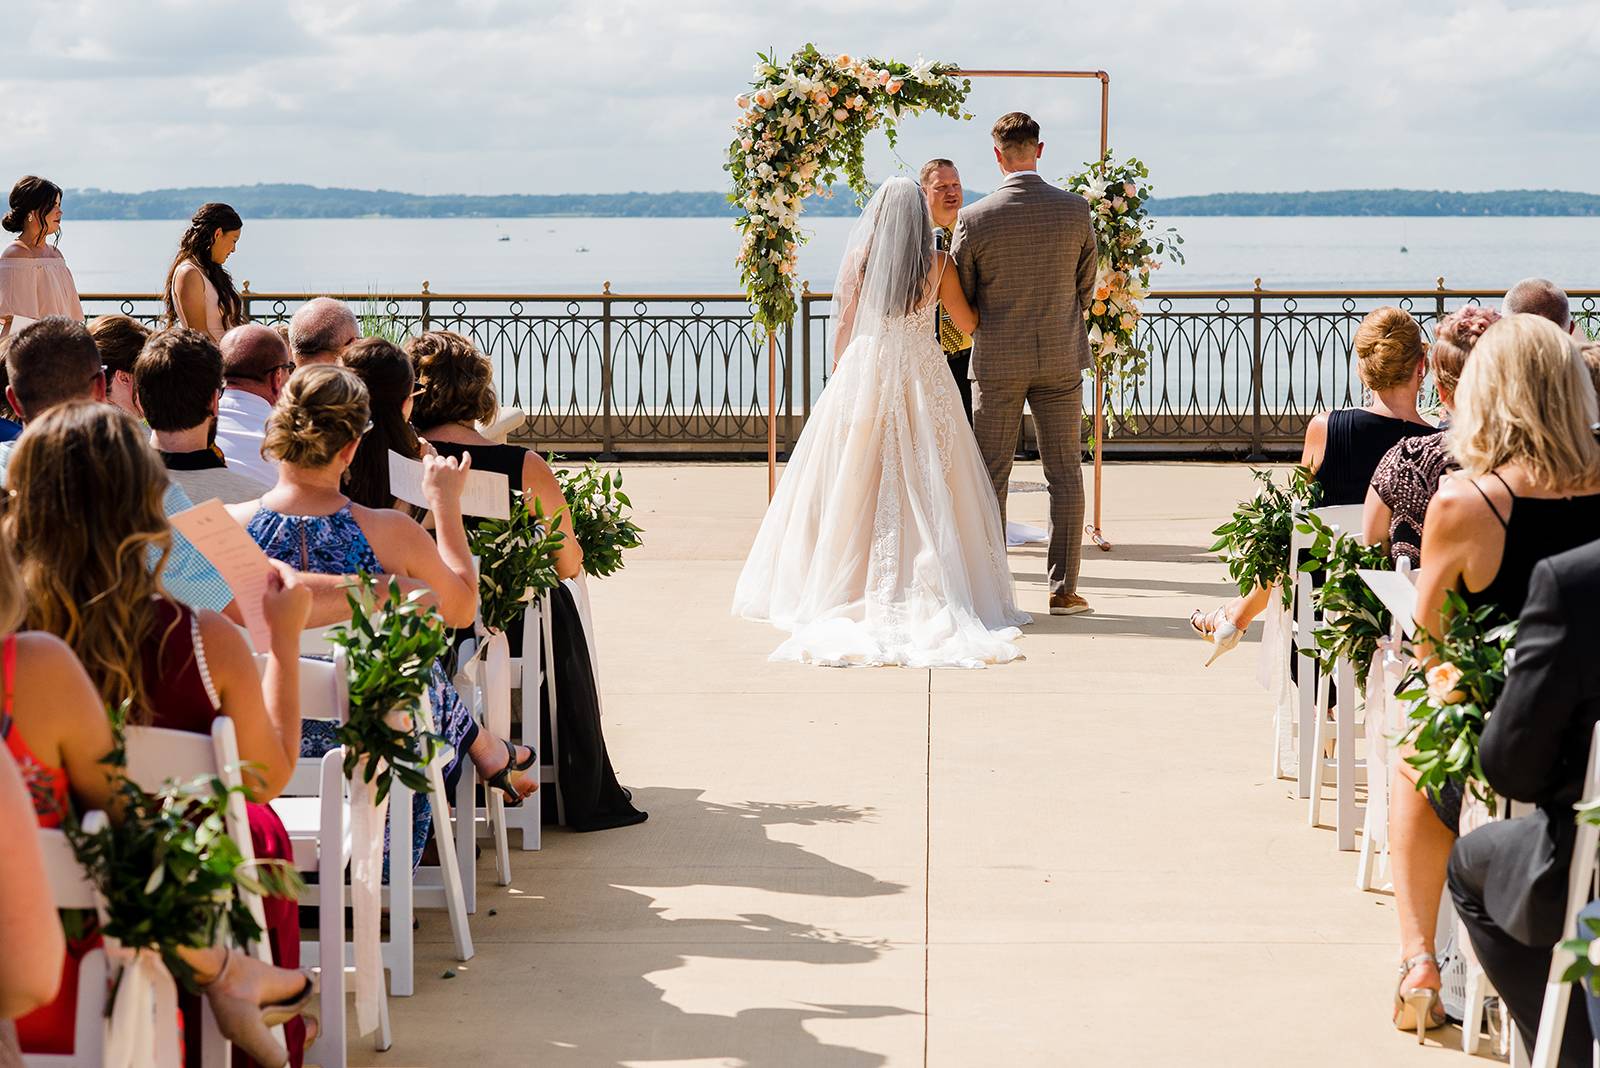 Wisconsin waterfront lakeside wedding ceremony reception venue